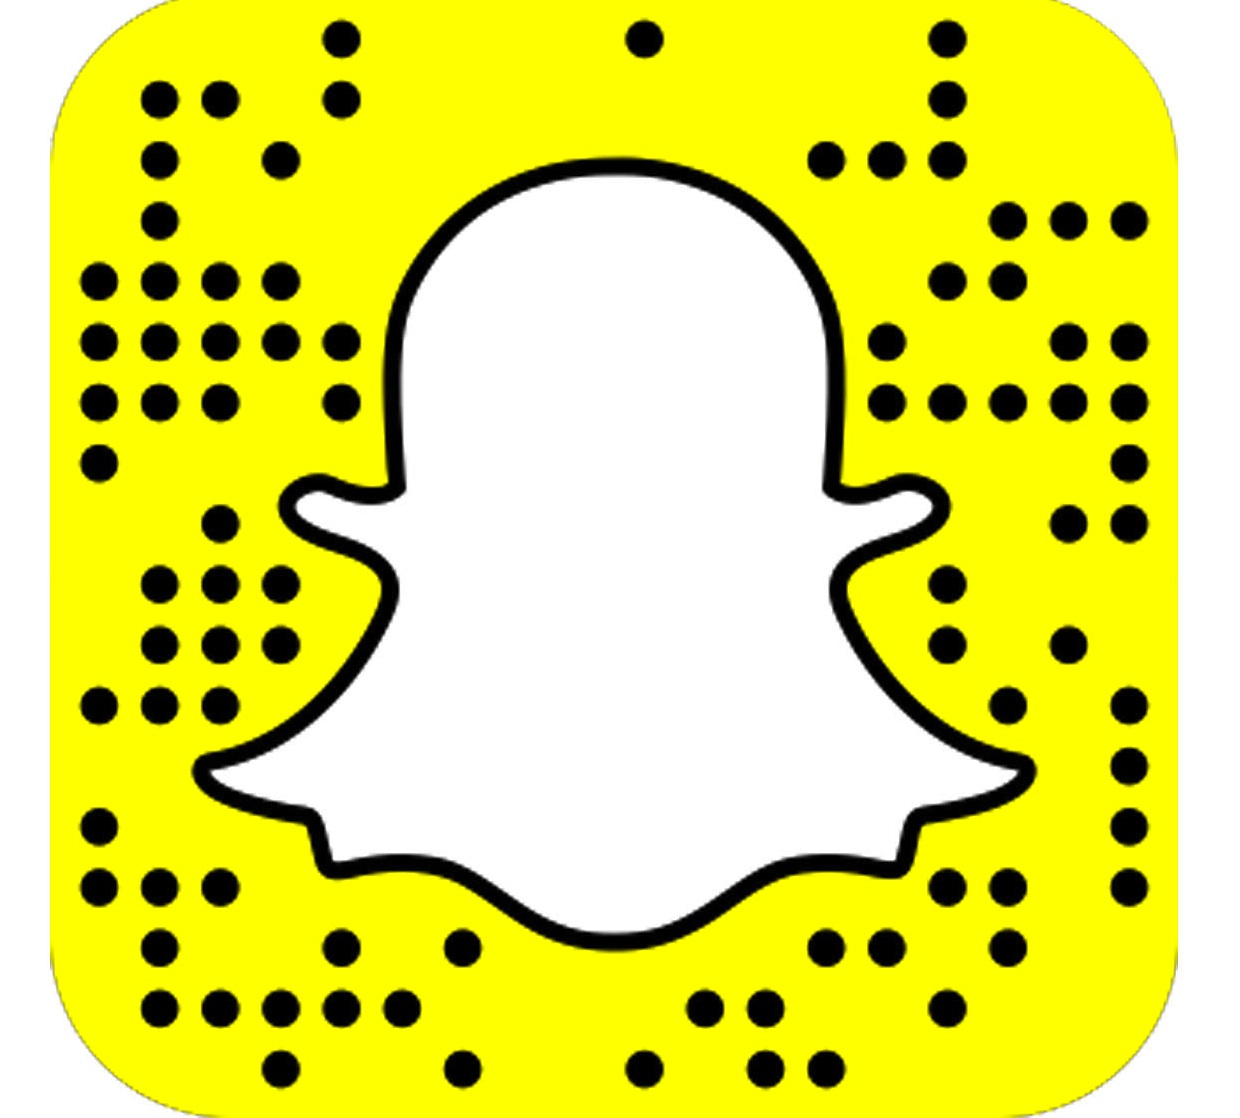 6 Ways PR Is Using Snapchat